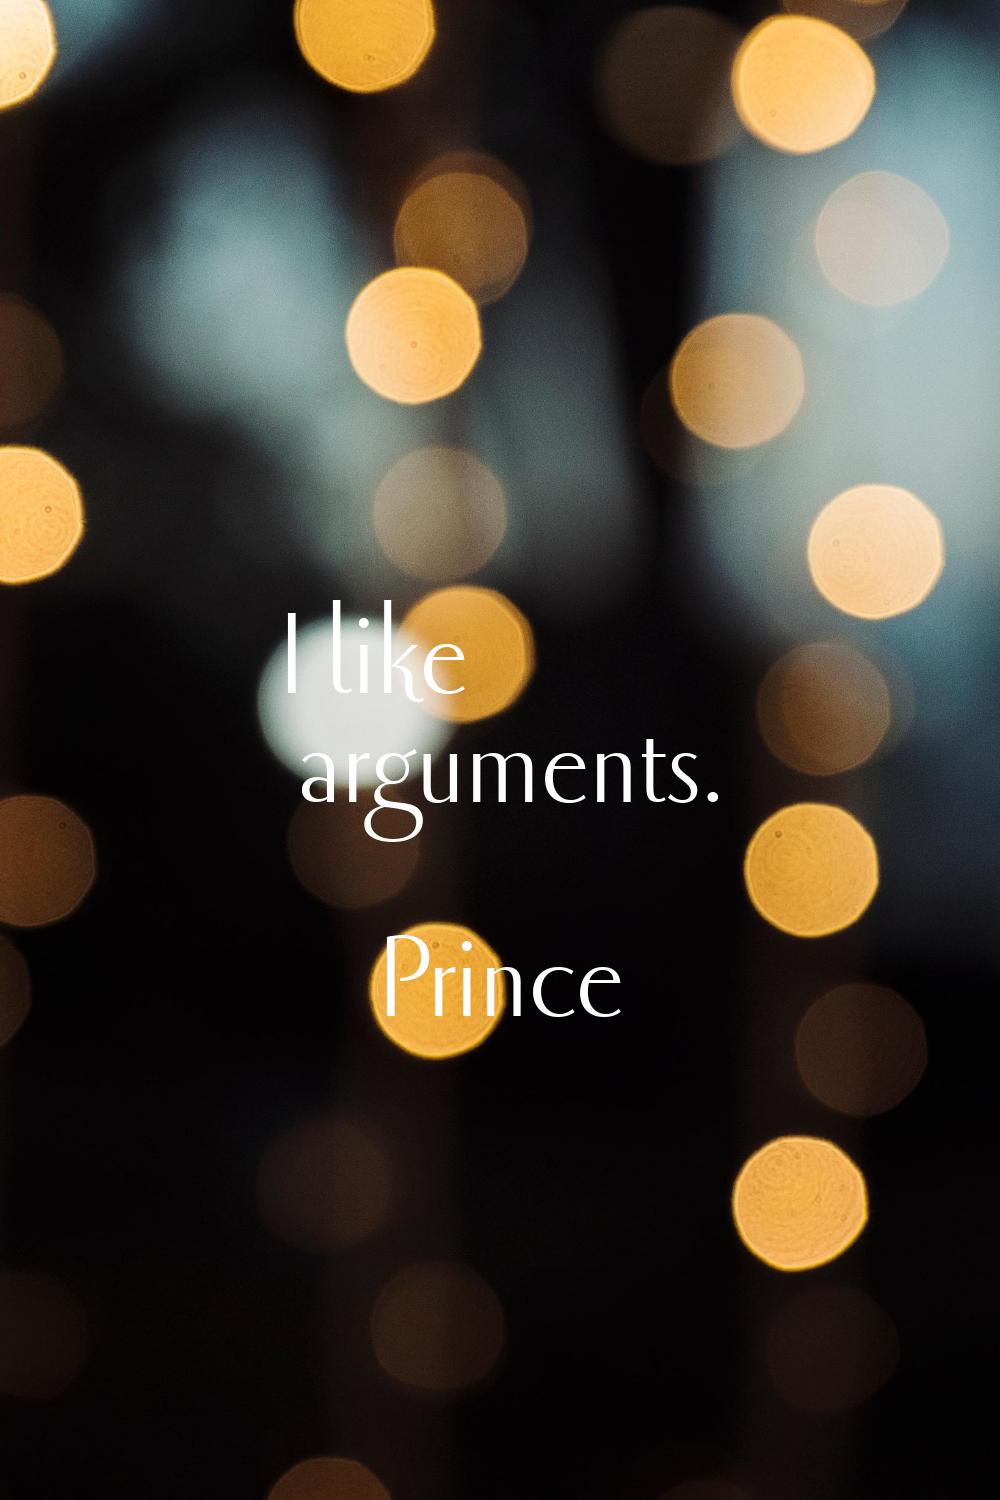 I like arguments.